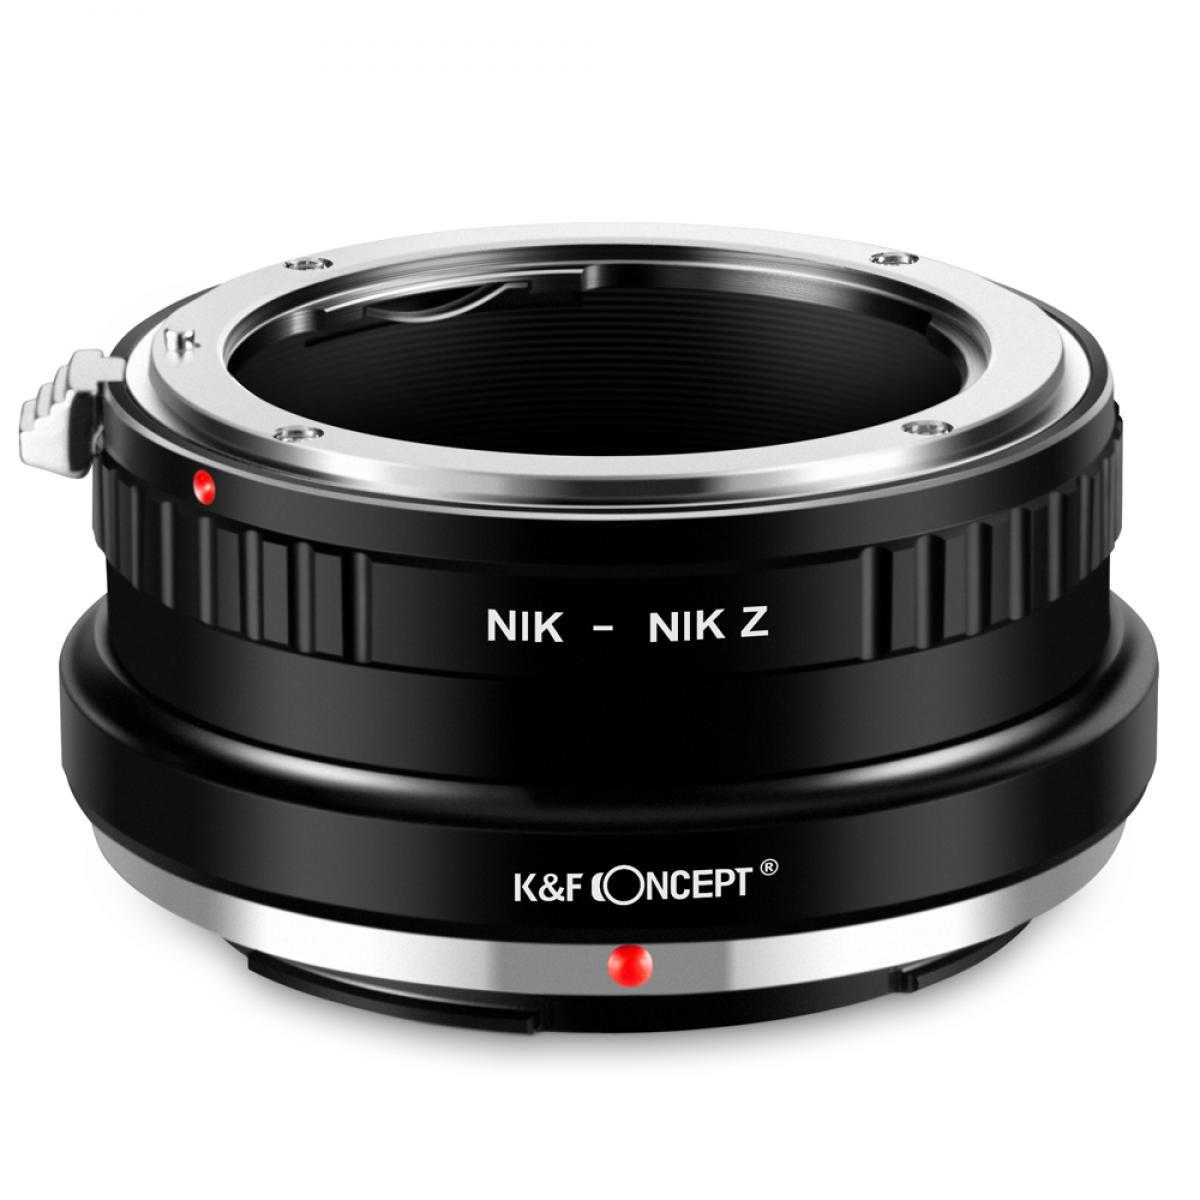 Photos - Teleconverter / Lens Mount Adapter K&F CONCEPT K&F Concept Nikon F Lenses to Nikon Z Lens Mount Adapter KF06.372 